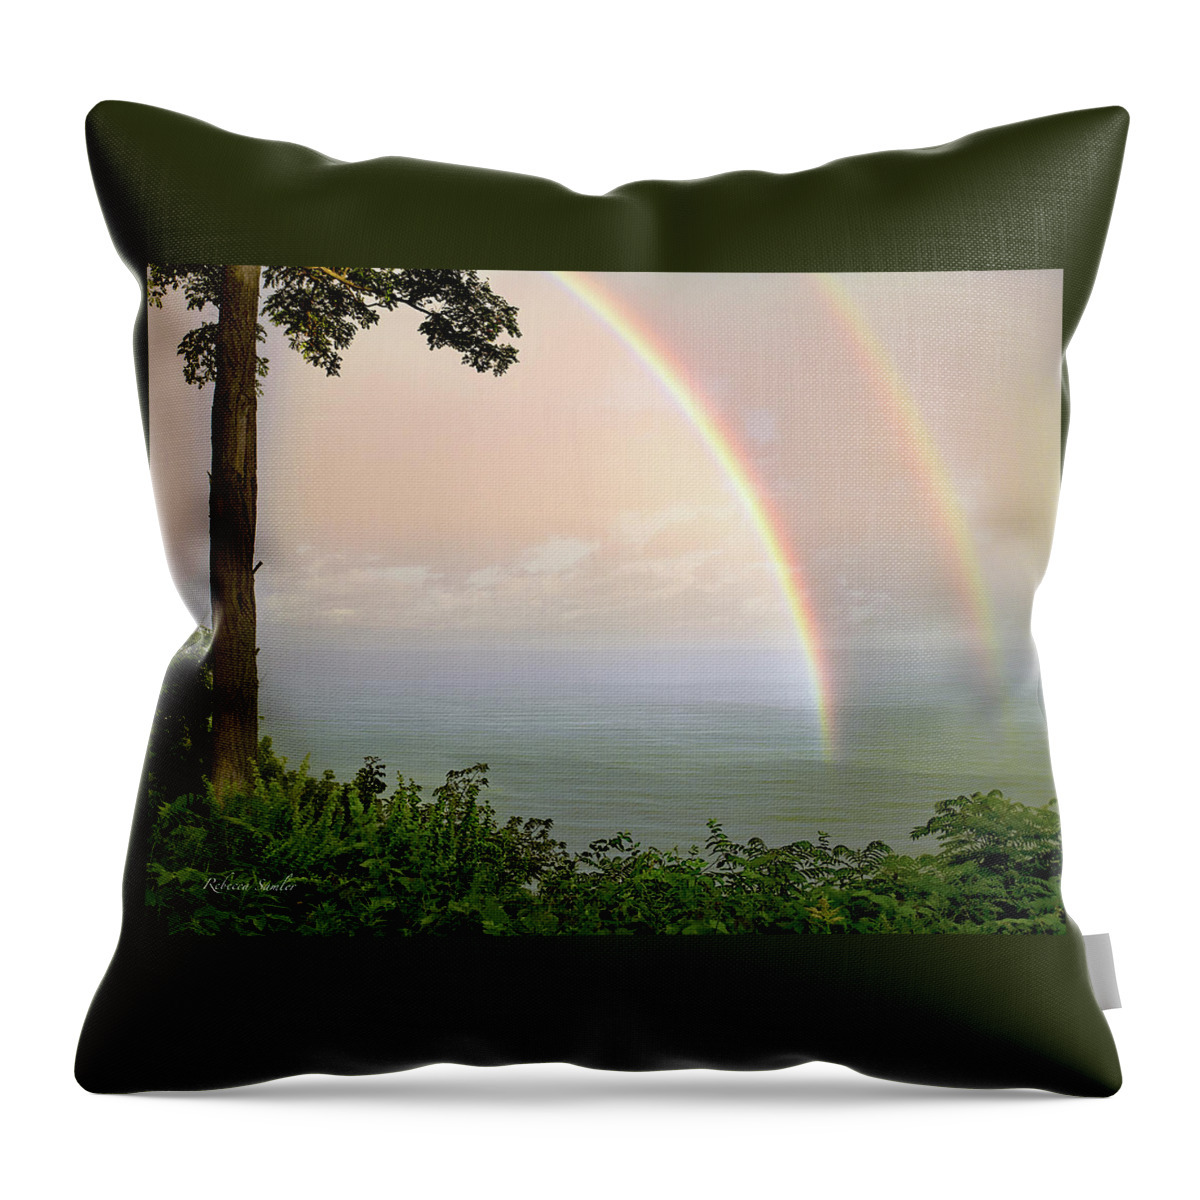 Rainbow Throw Pillow featuring the photograph Better Days Ahead by Rebecca Samler